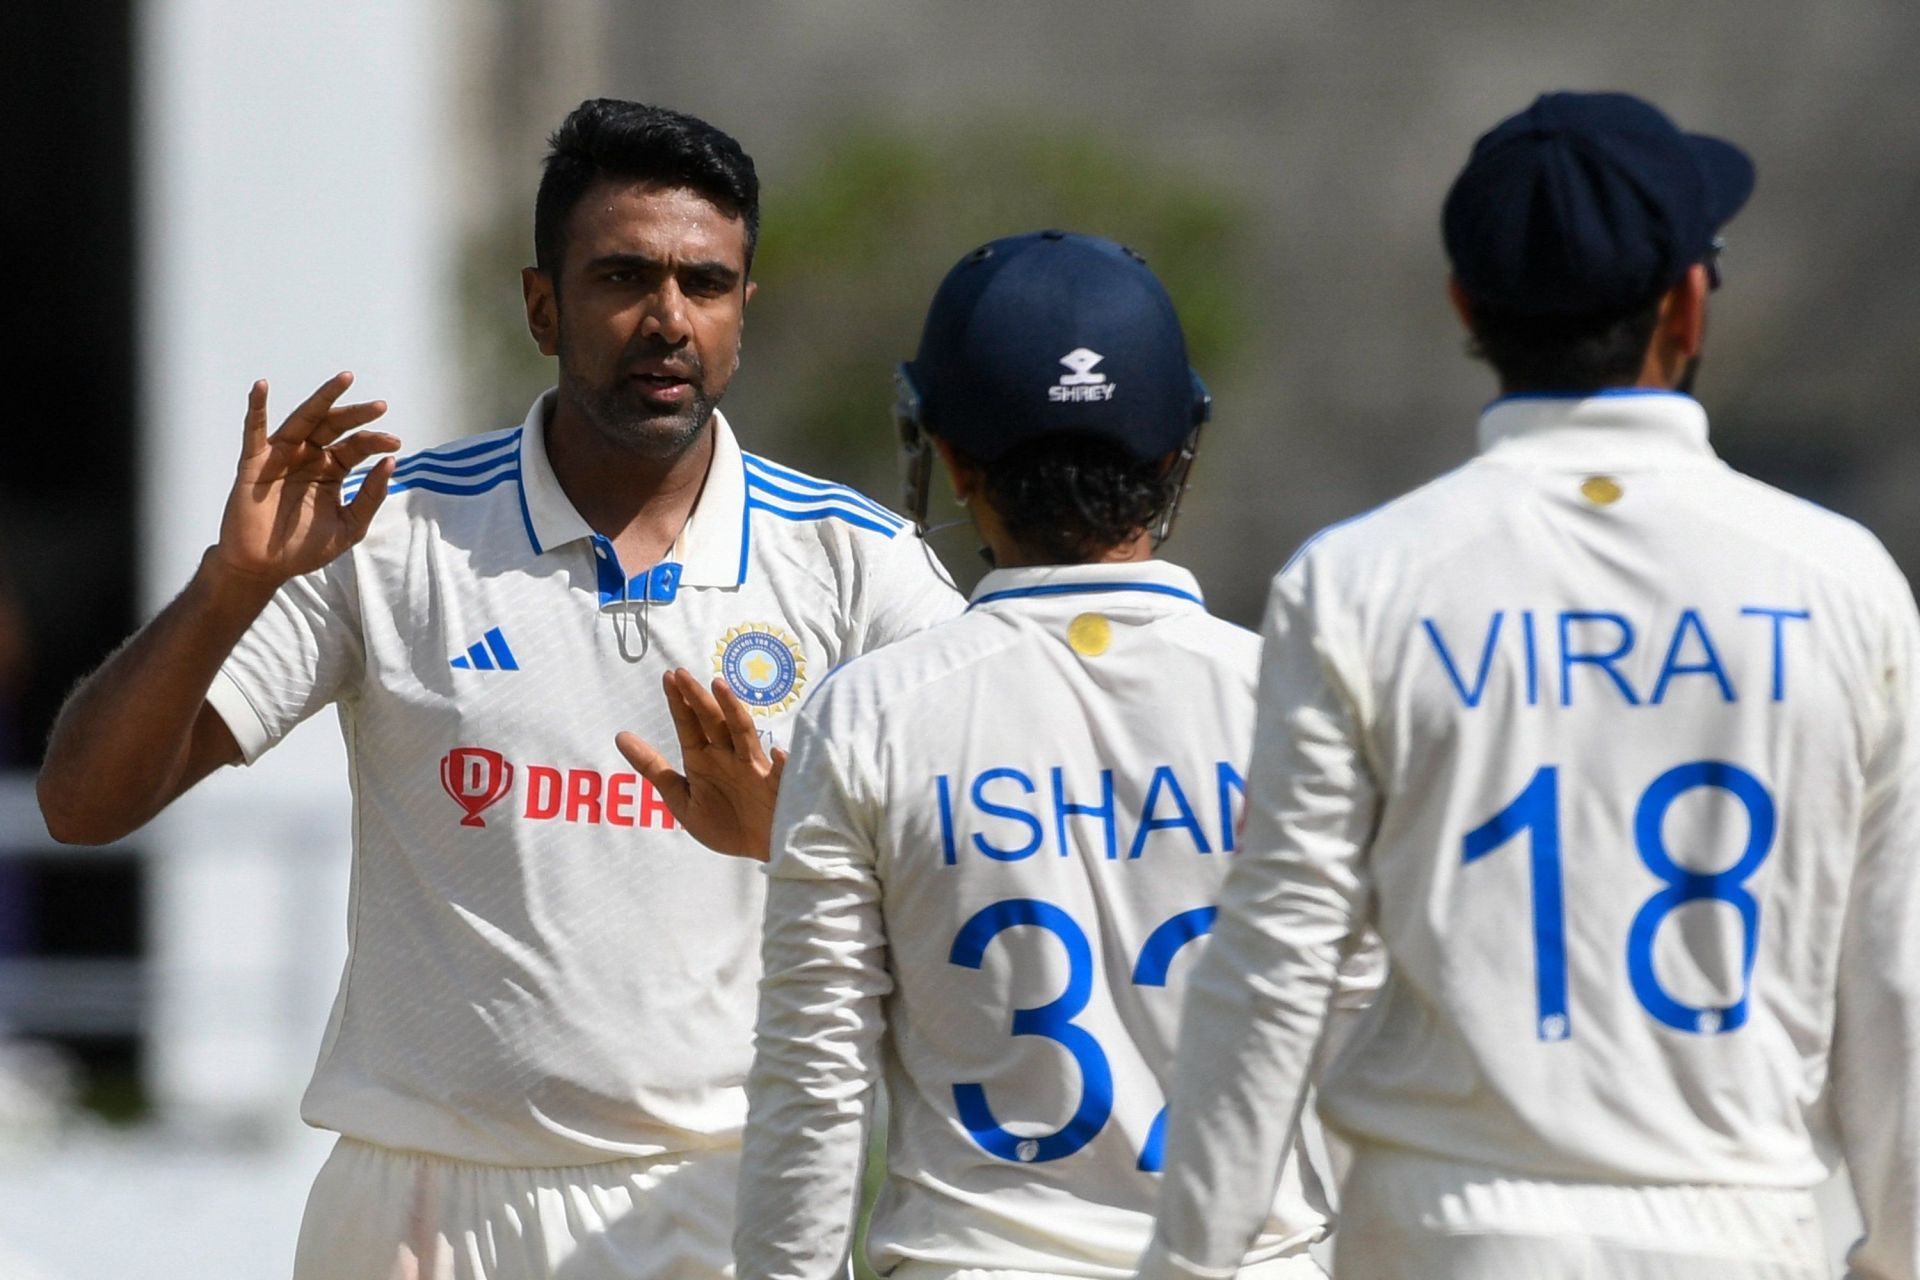 Ravichandran Ashwin ran through the West Indies batting lineup in the previous Test